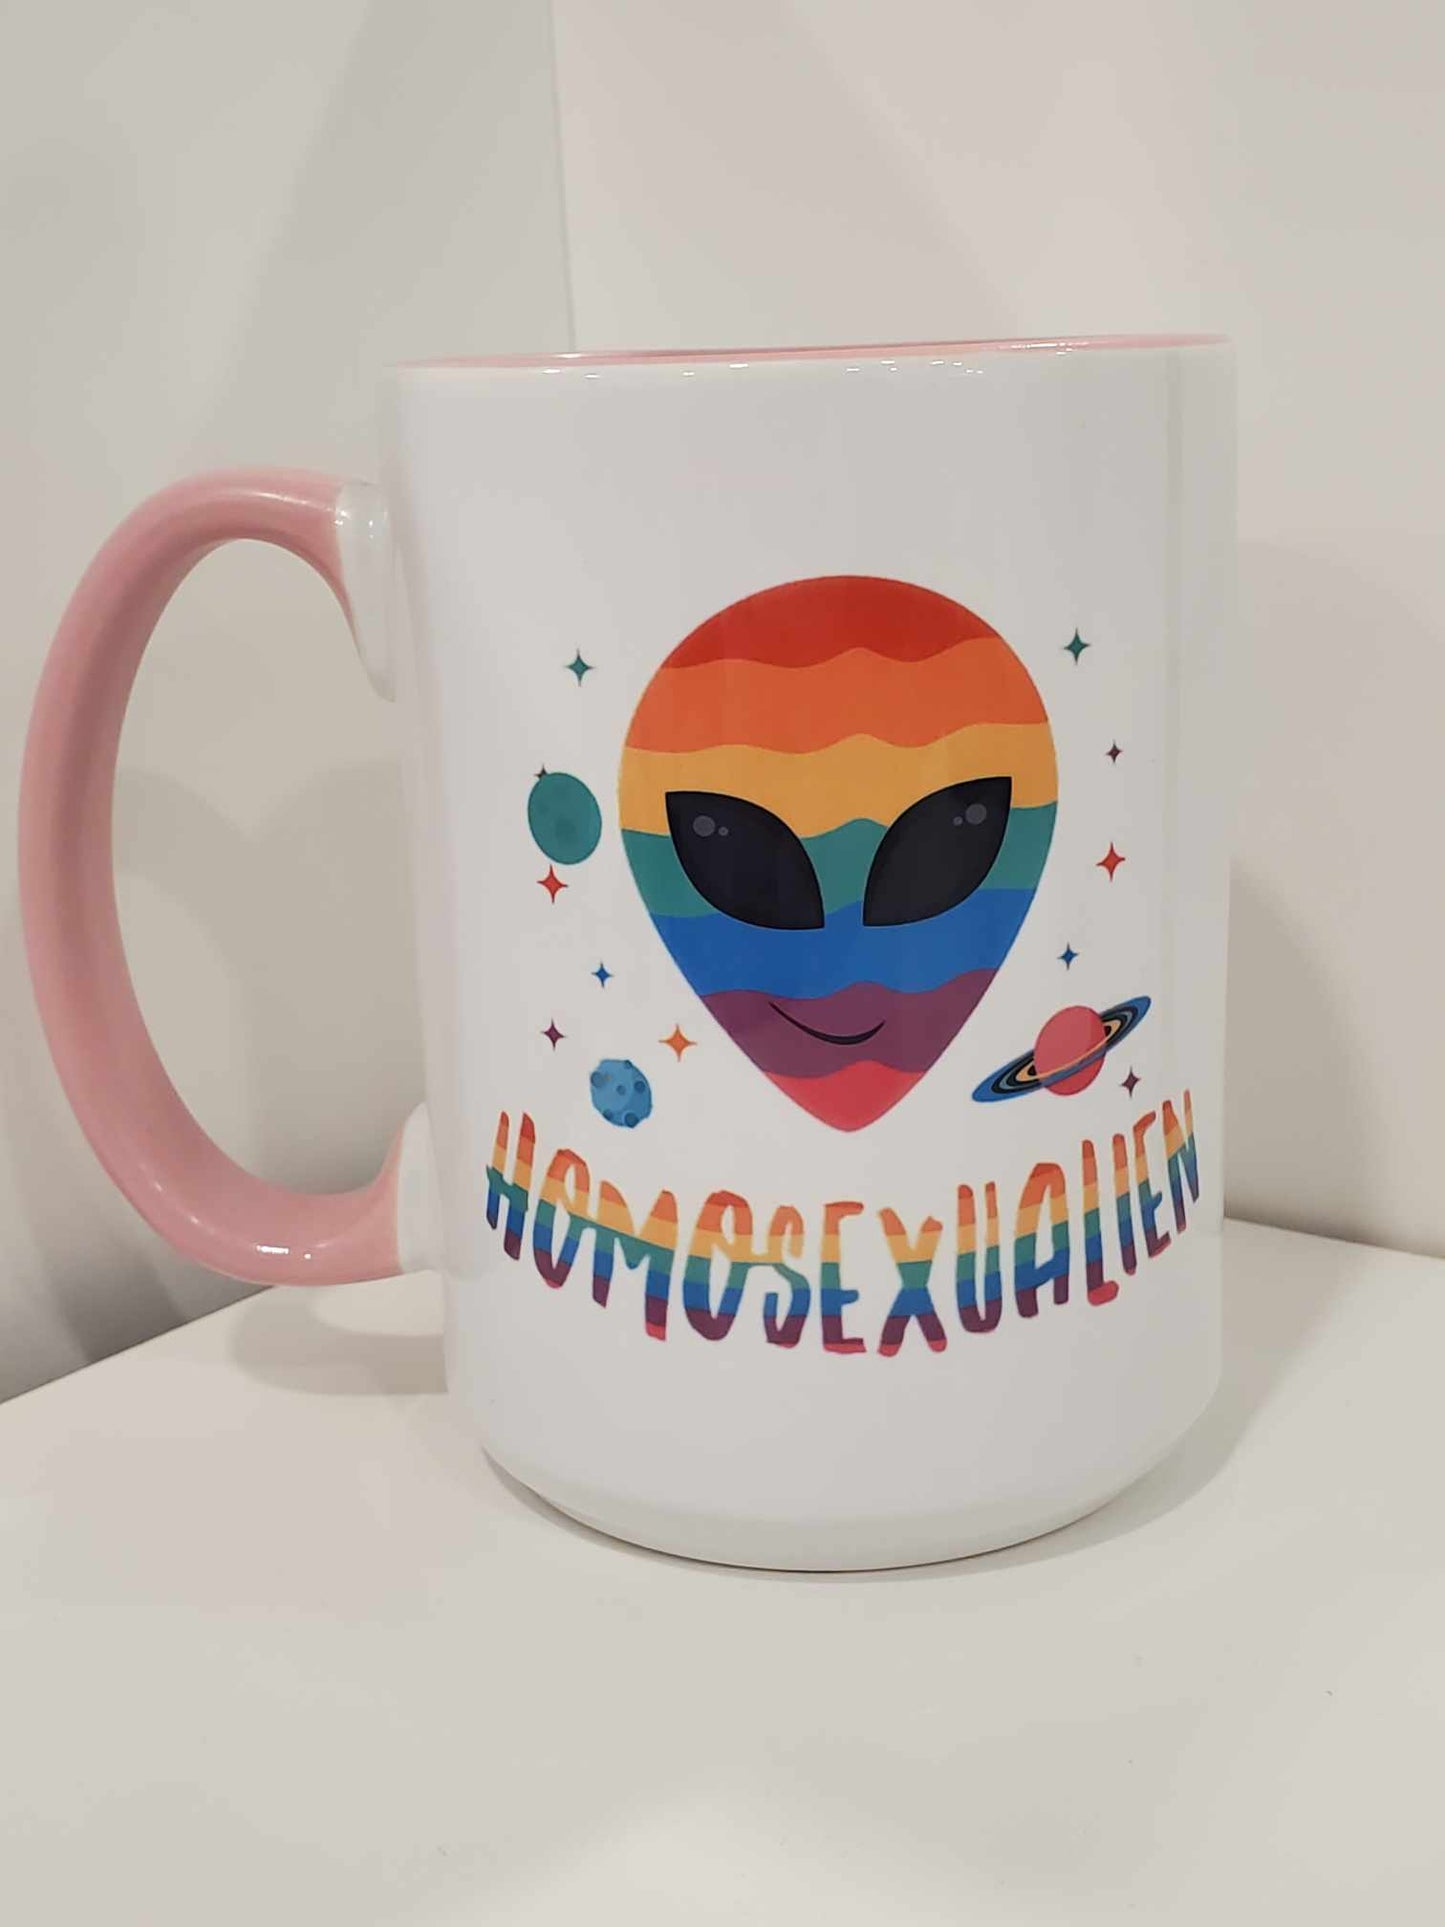 Homosexualien 15oz Coffee Mug Pink